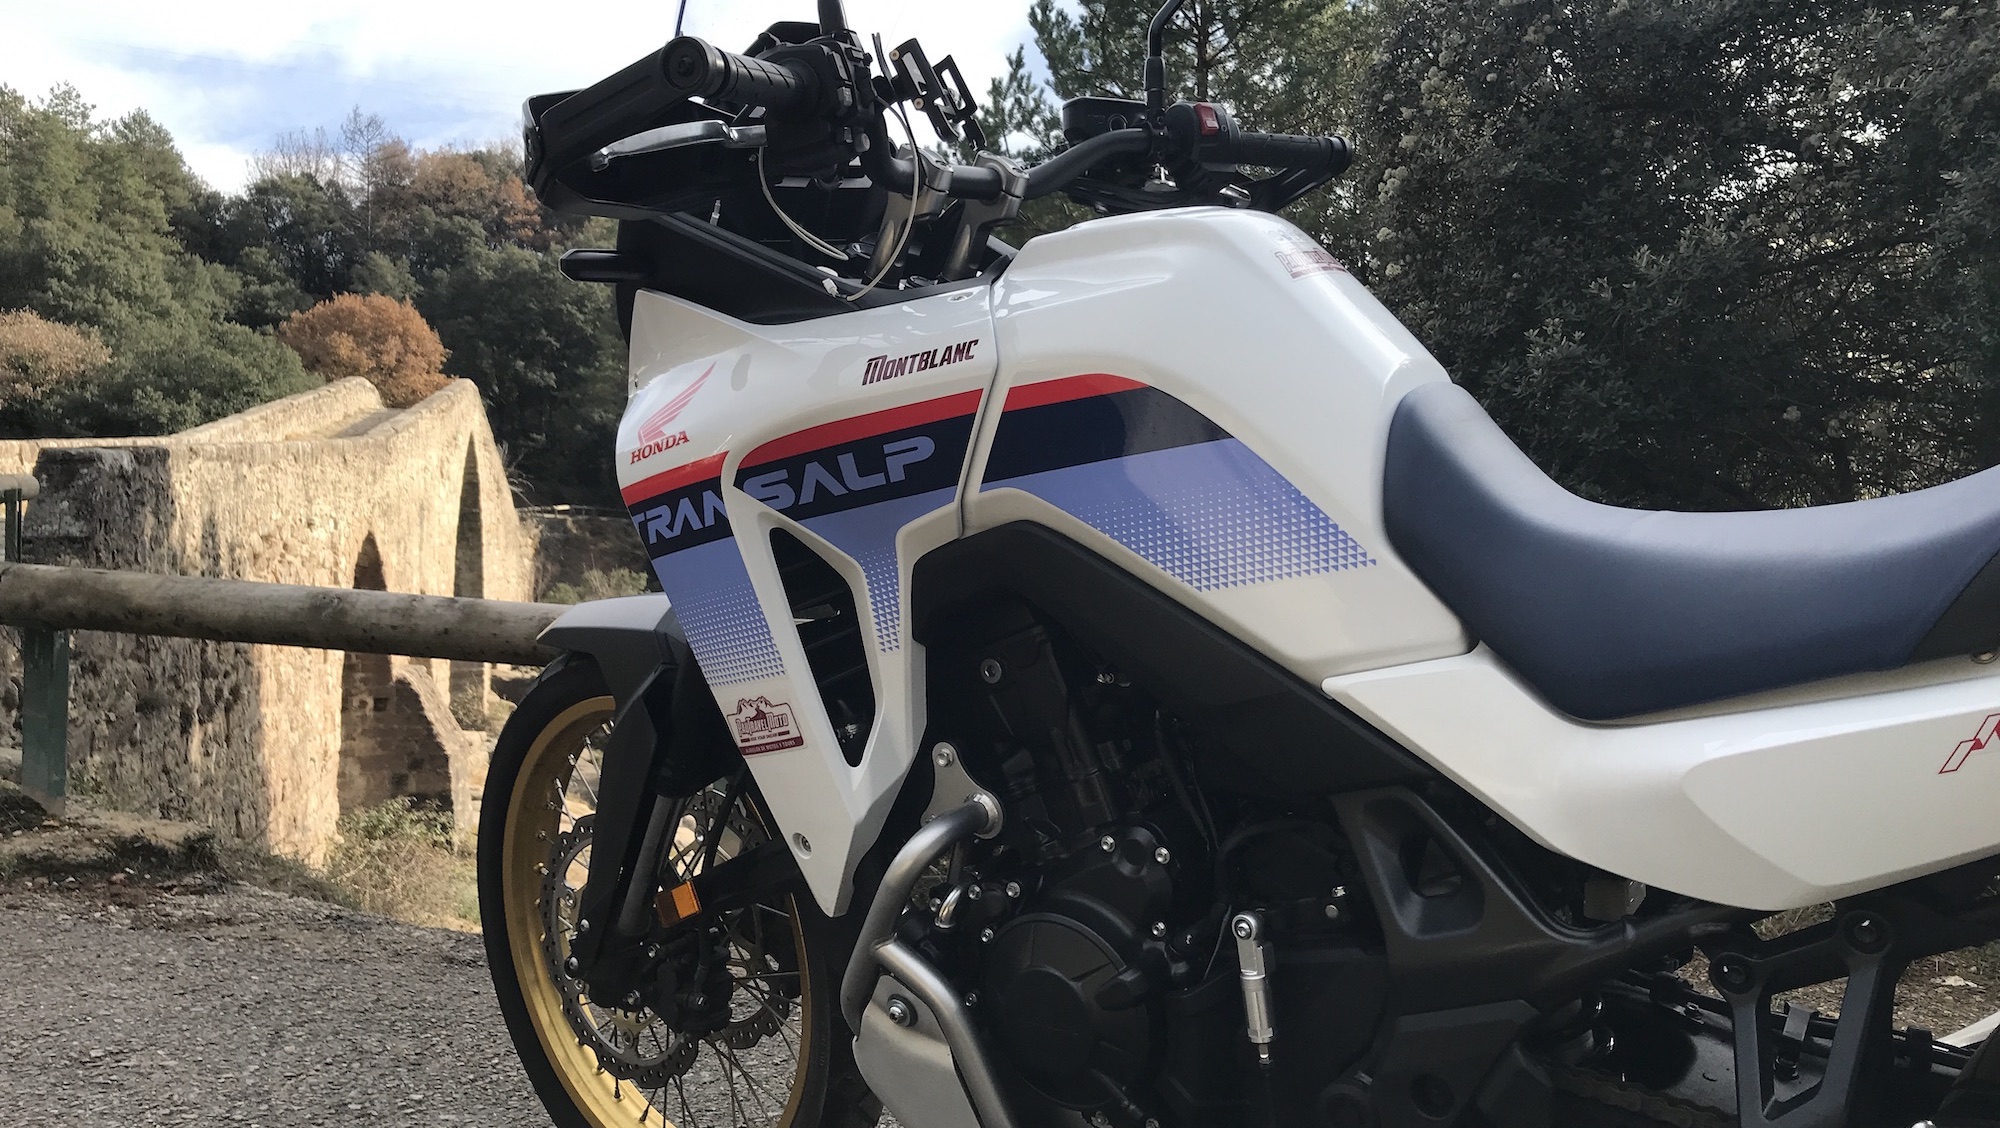 Moto Transalp 750 en carretera